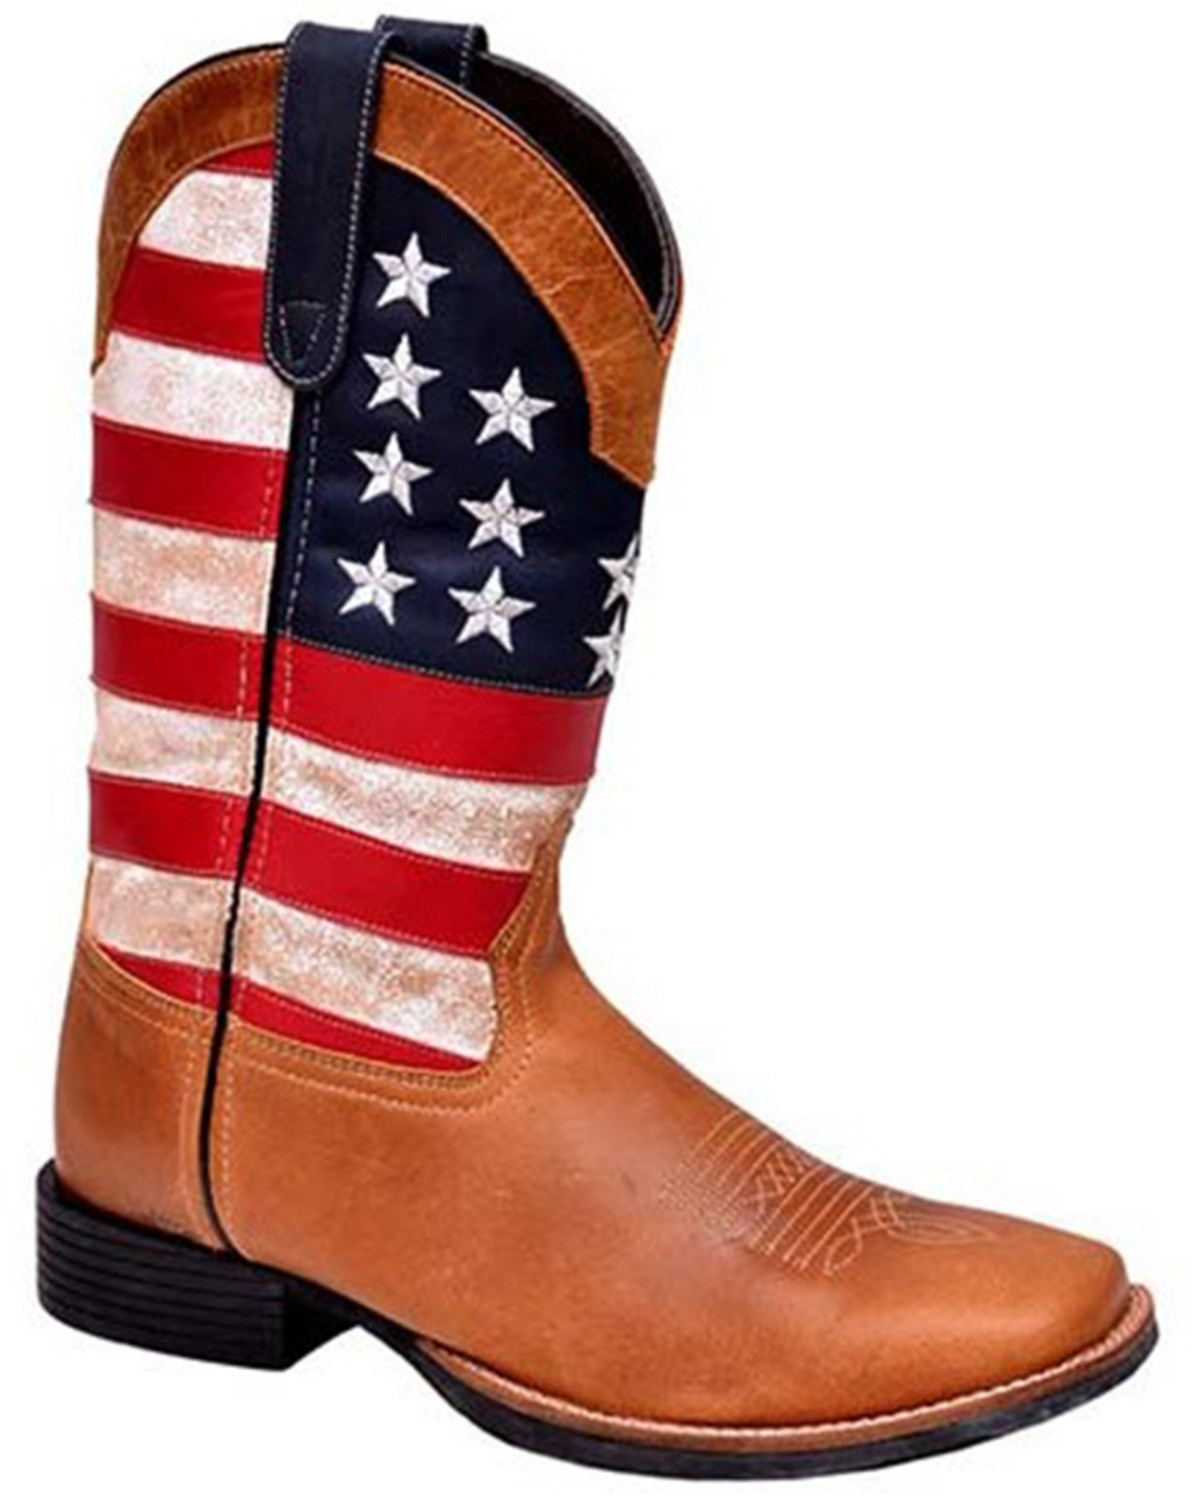 Roper Men's Patriotism Oiled Vamp Performance Western Boots - Square Toe